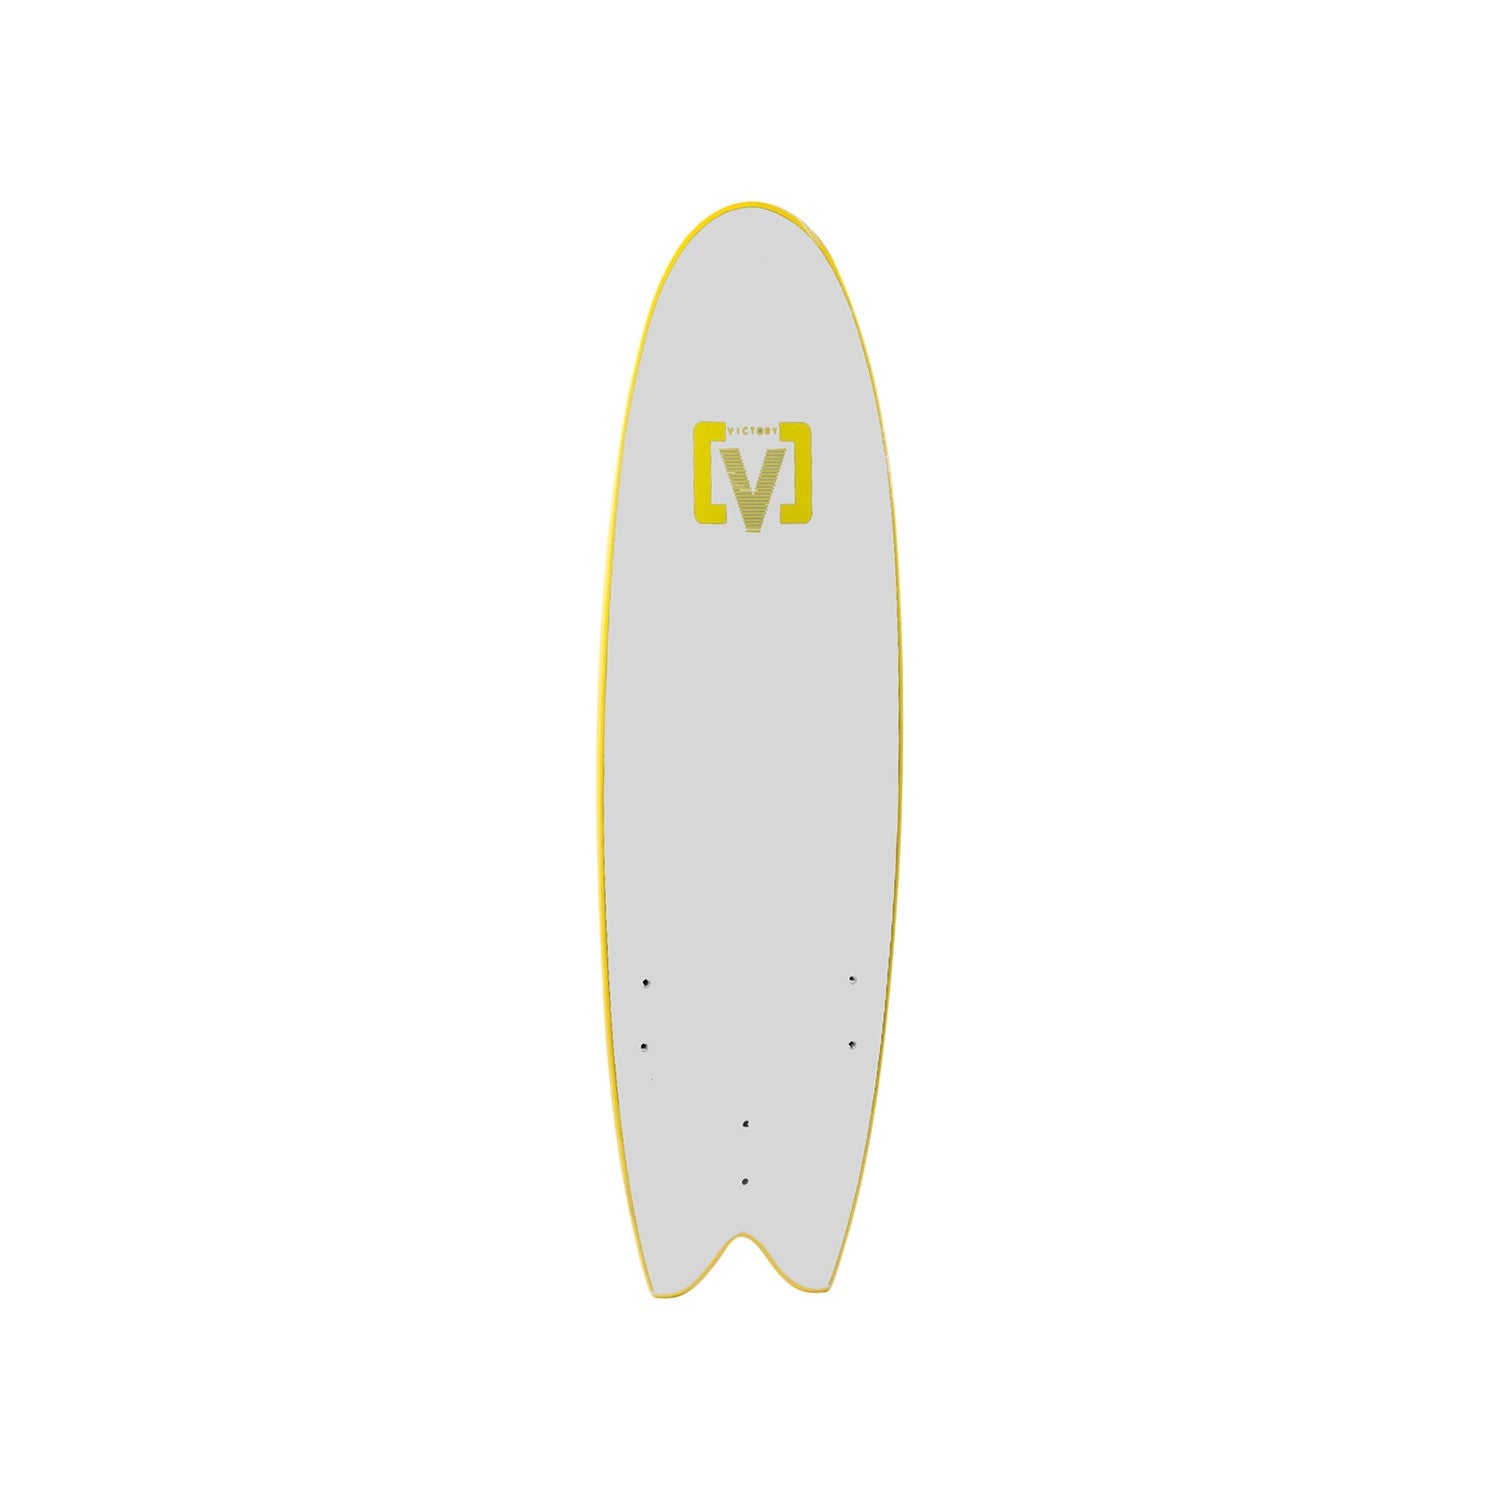 VICTORY - EPS Softboard - Foam Surfboard - Fish 6'6 - Yellow